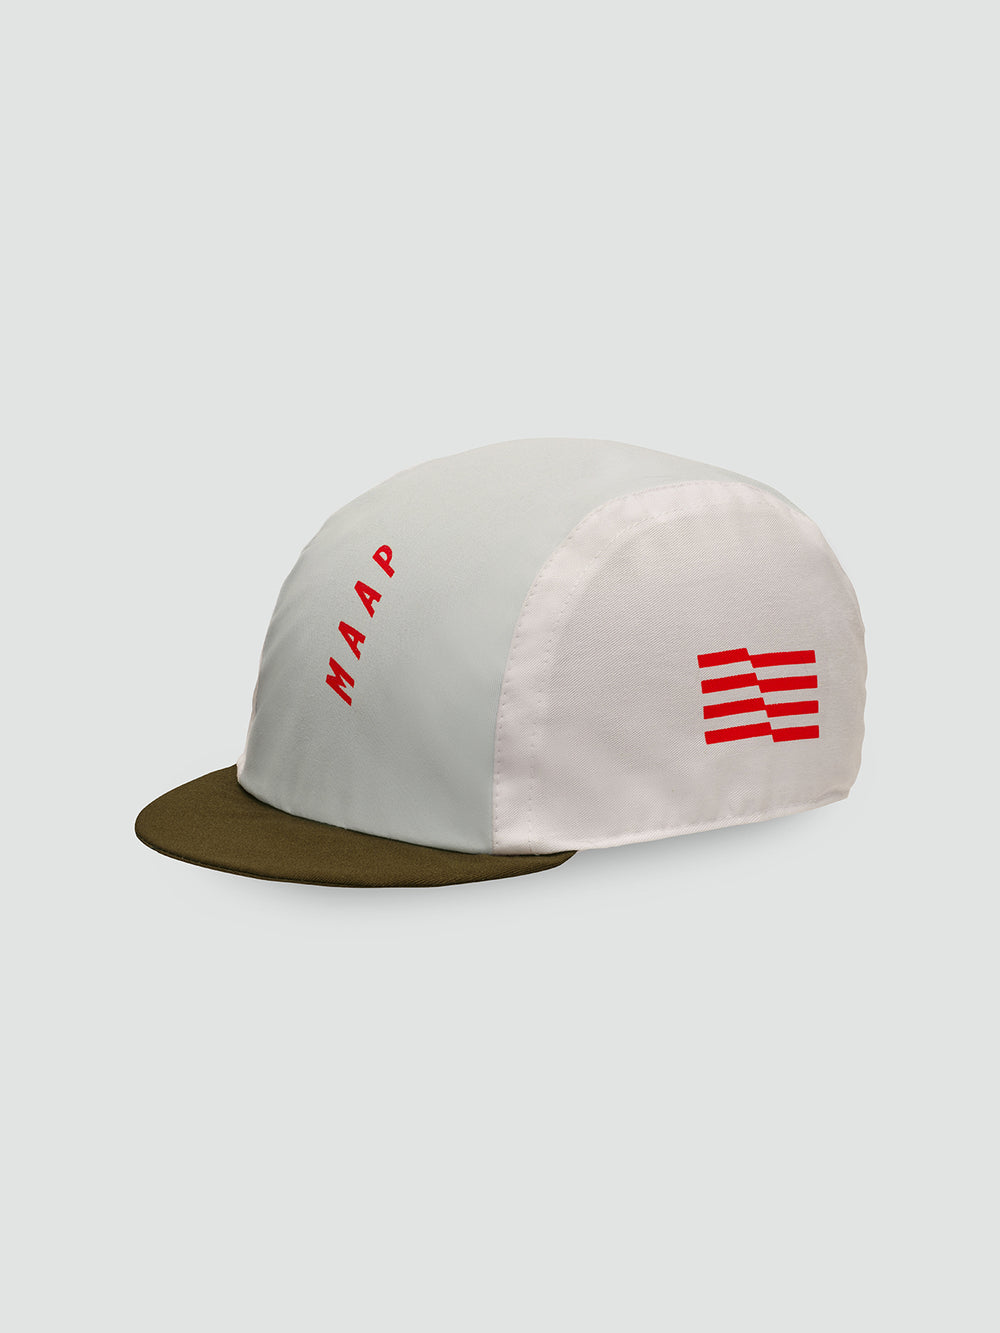 Product Image for Emblem Cap